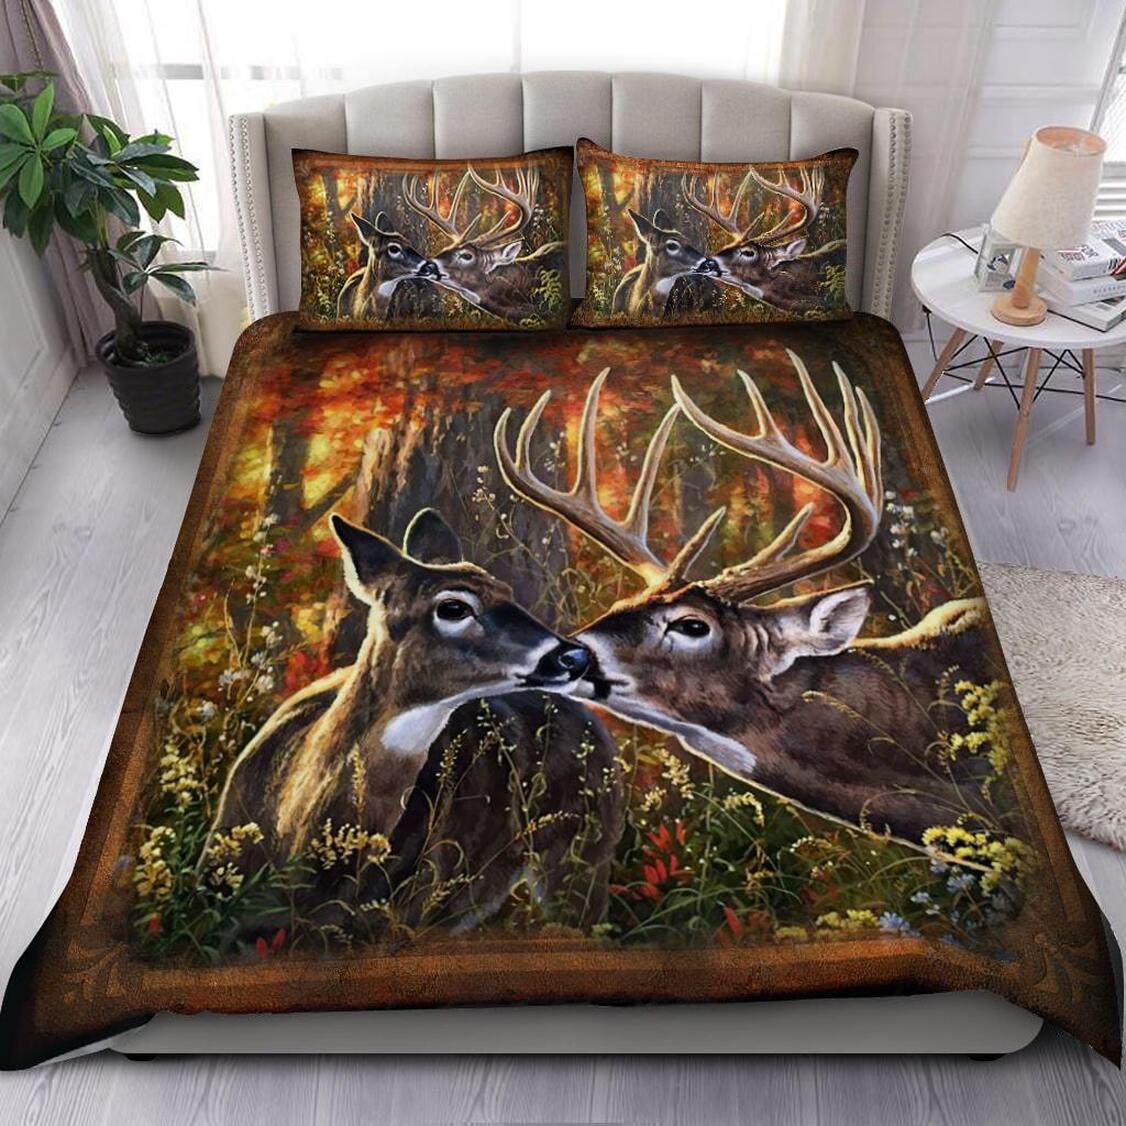 Couple Deer Lover Quilt Bedding Set - Beautiful Deer Hunting Quilt Bed Set Rustic Home Decor